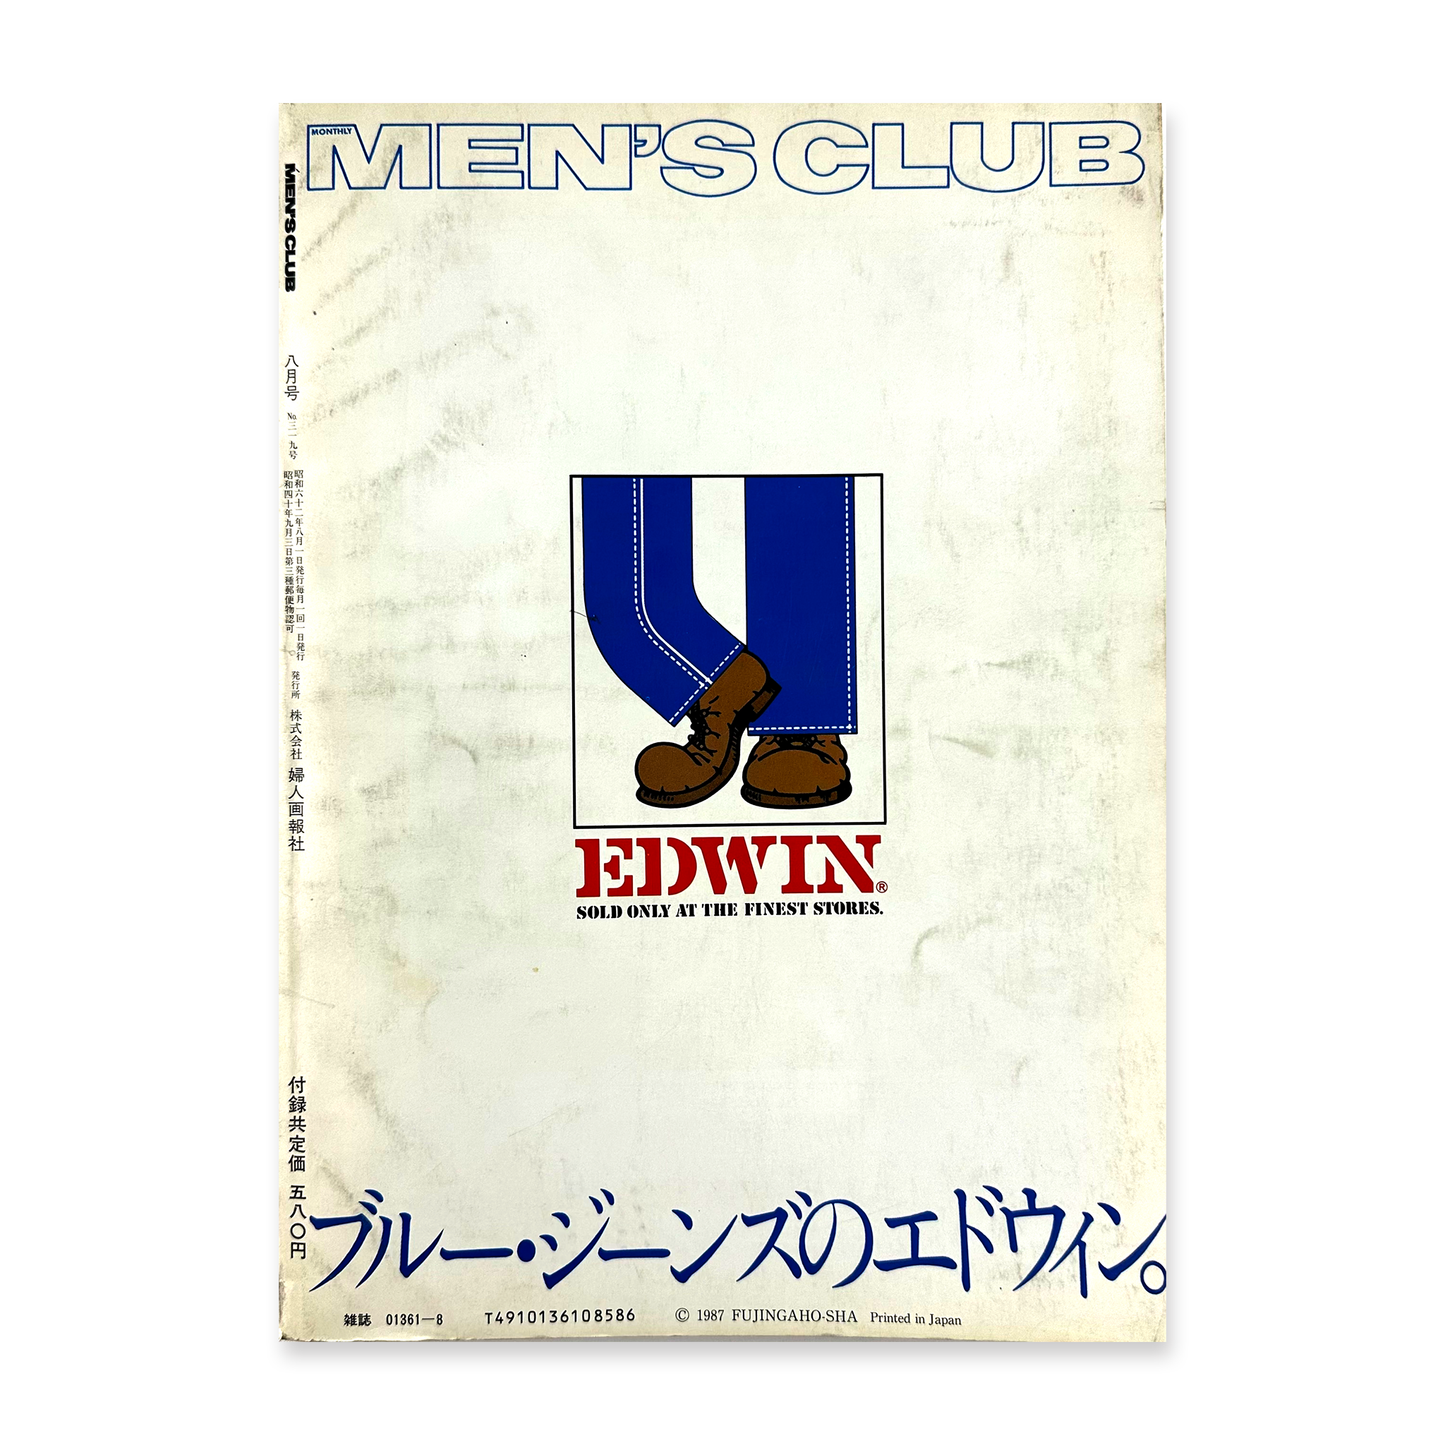 MEN'S CLUB 8月号 NO.319 昭和62年8月｜メンズクラブ編集部